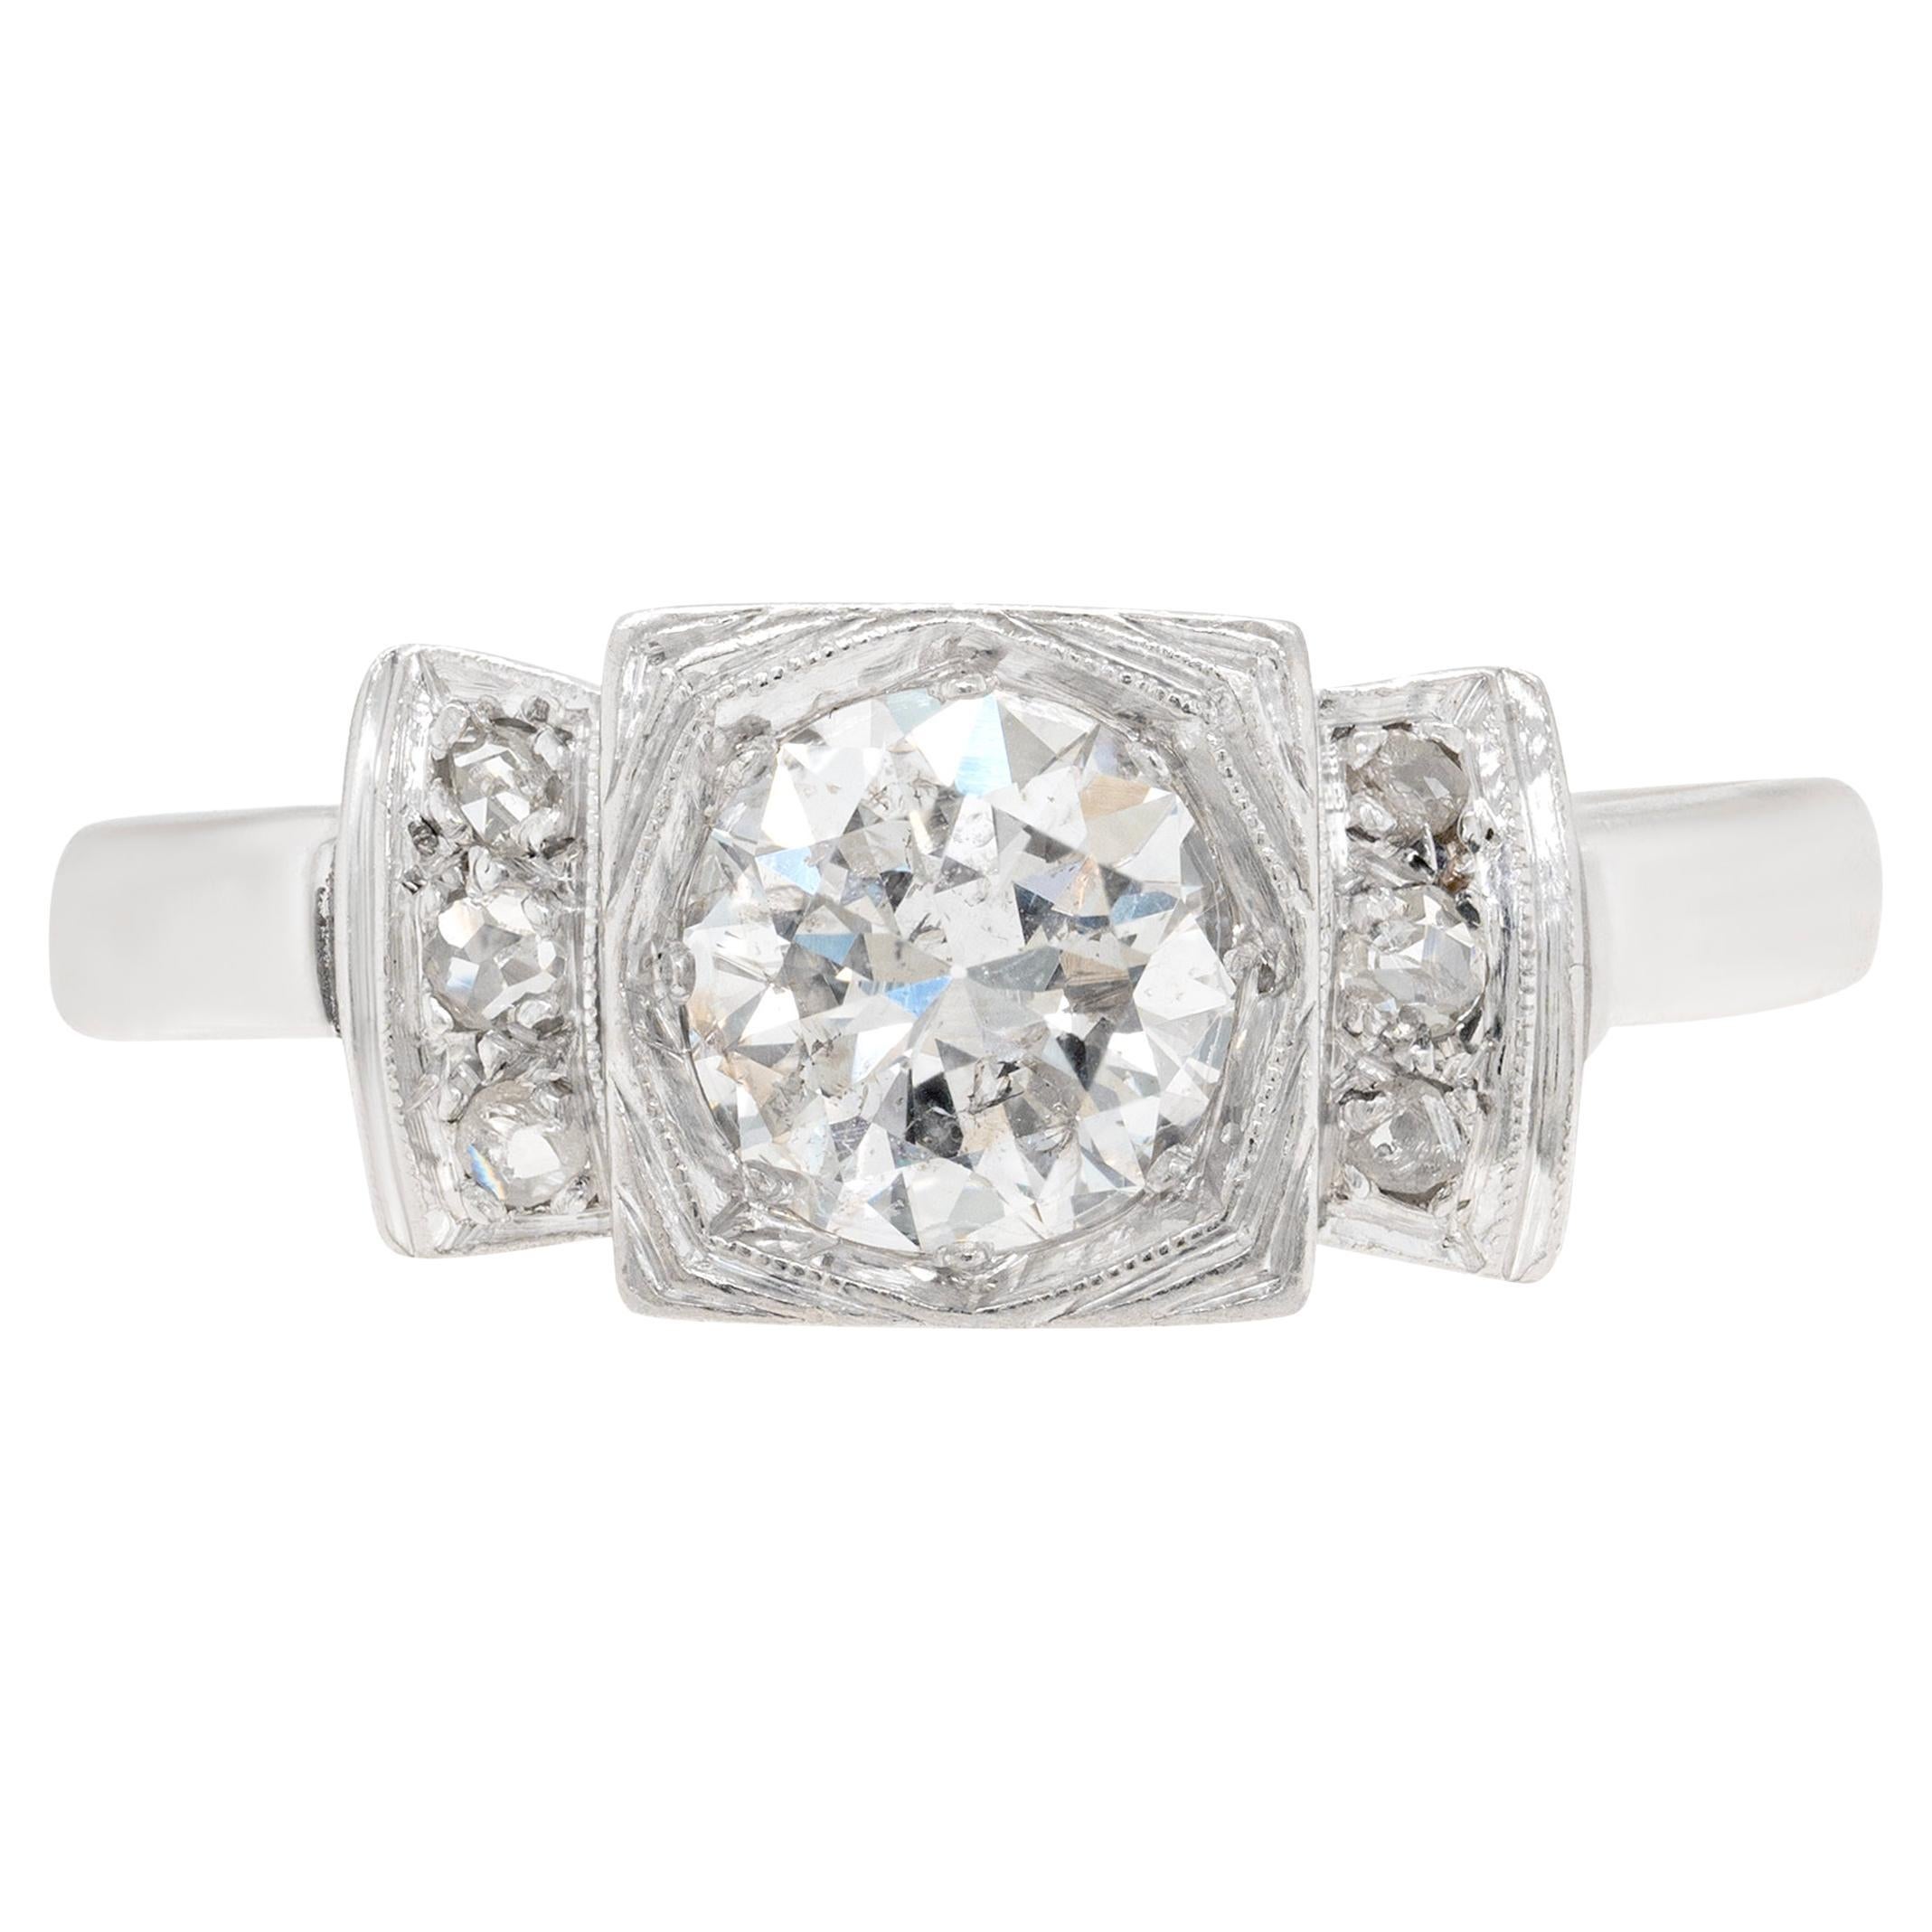 Vintage Art Deco Transitional Cut Diamond 18 Carat White Gold Engagement Ring For Sale